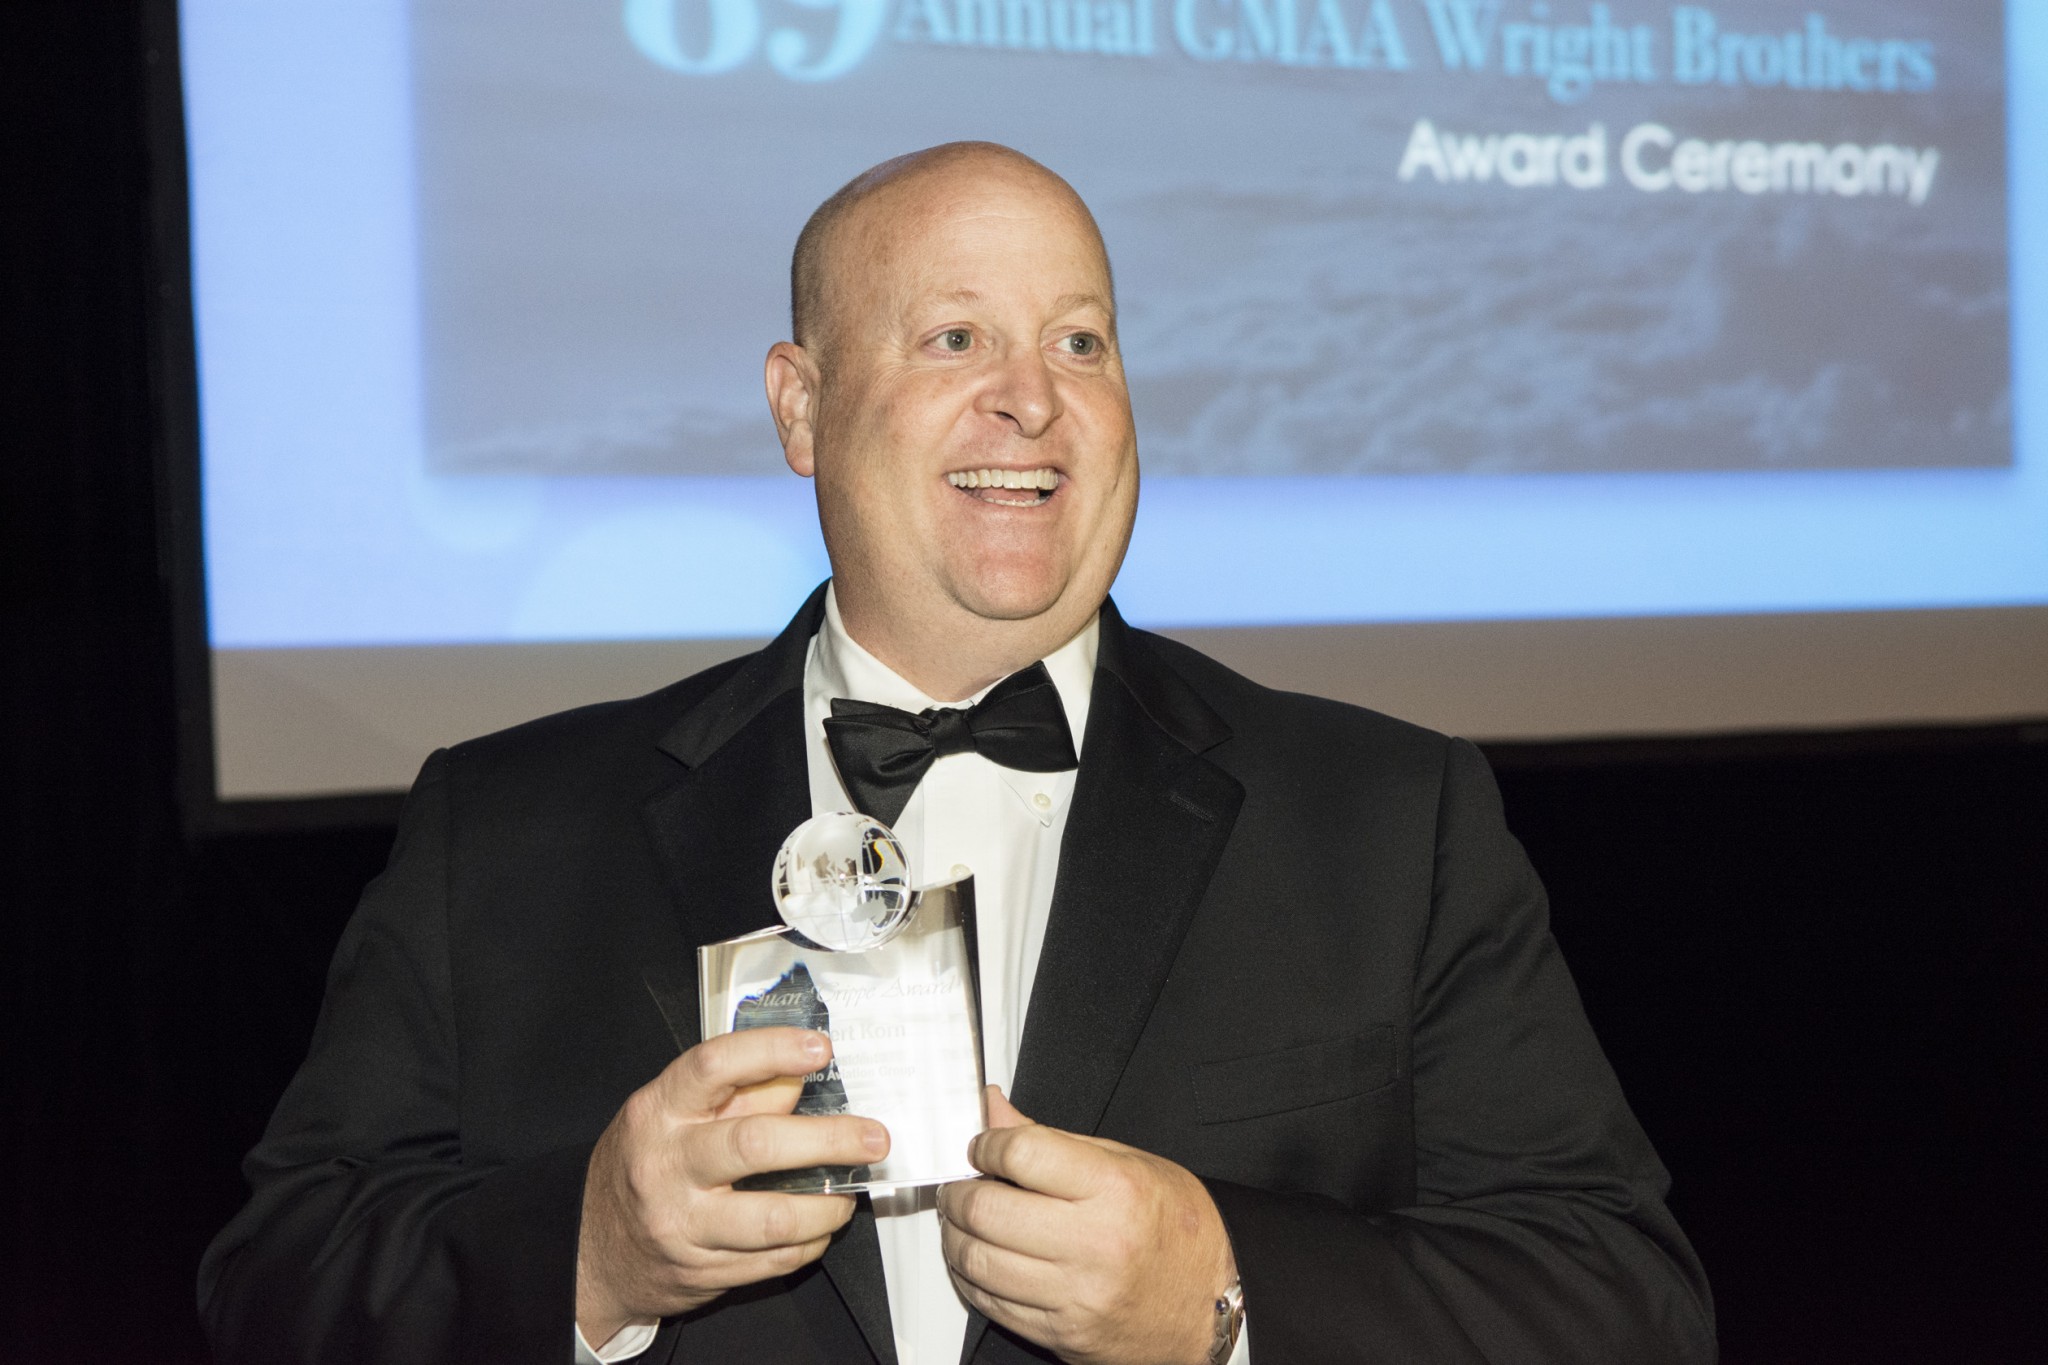 Apollo Aviation president awarded Juan Trippe award by the Greater Miami Aviation Association